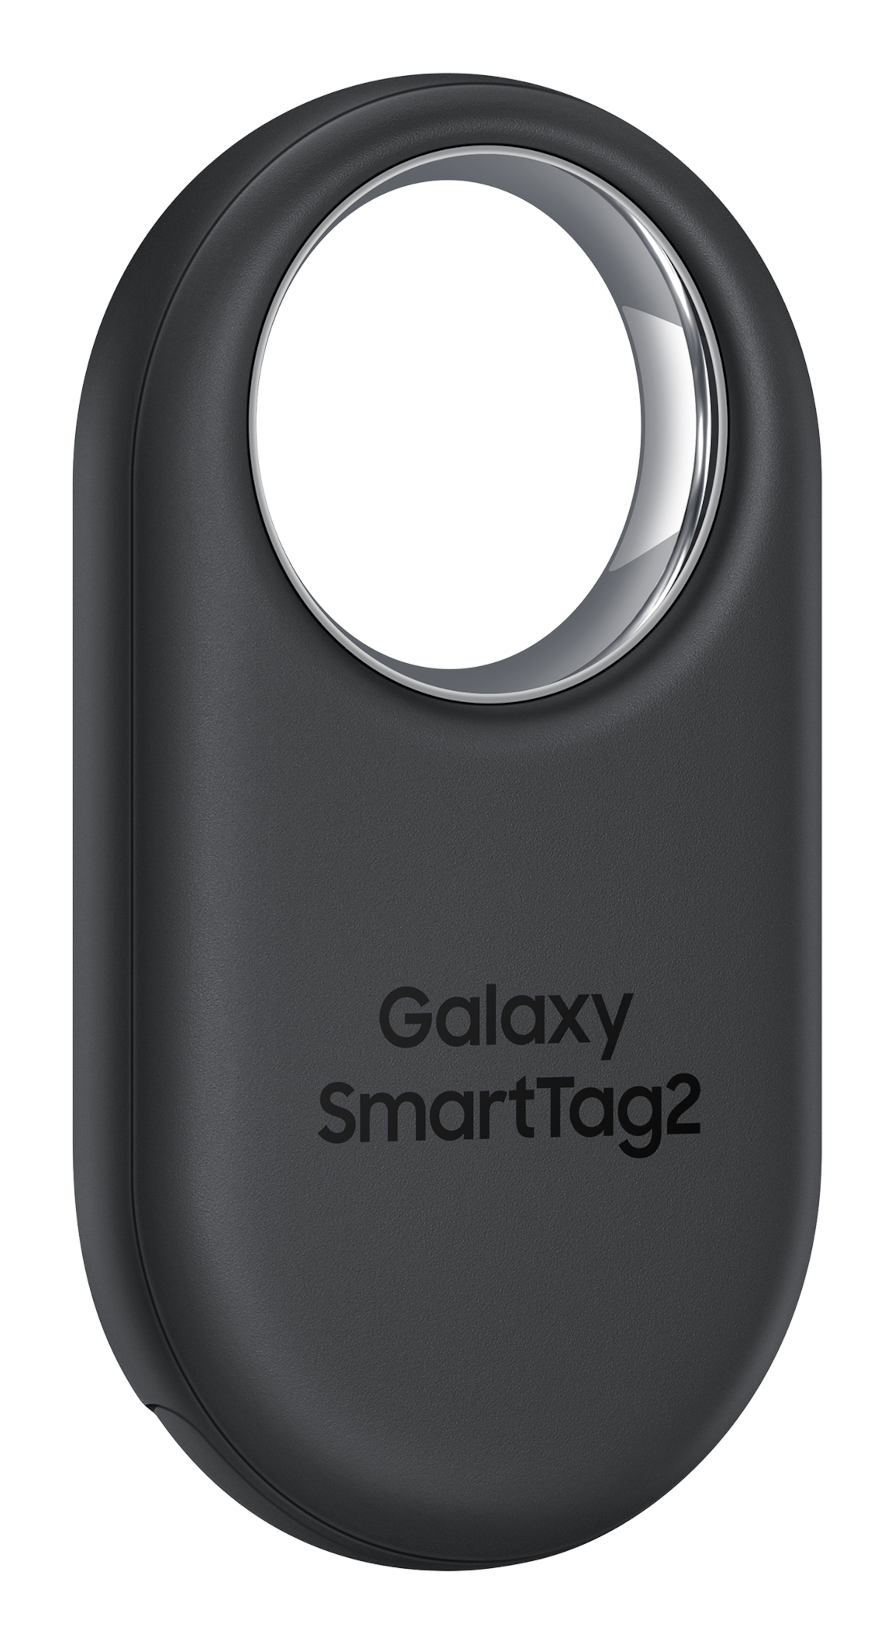 Samsung Galaxy SmartTag2 Black front left